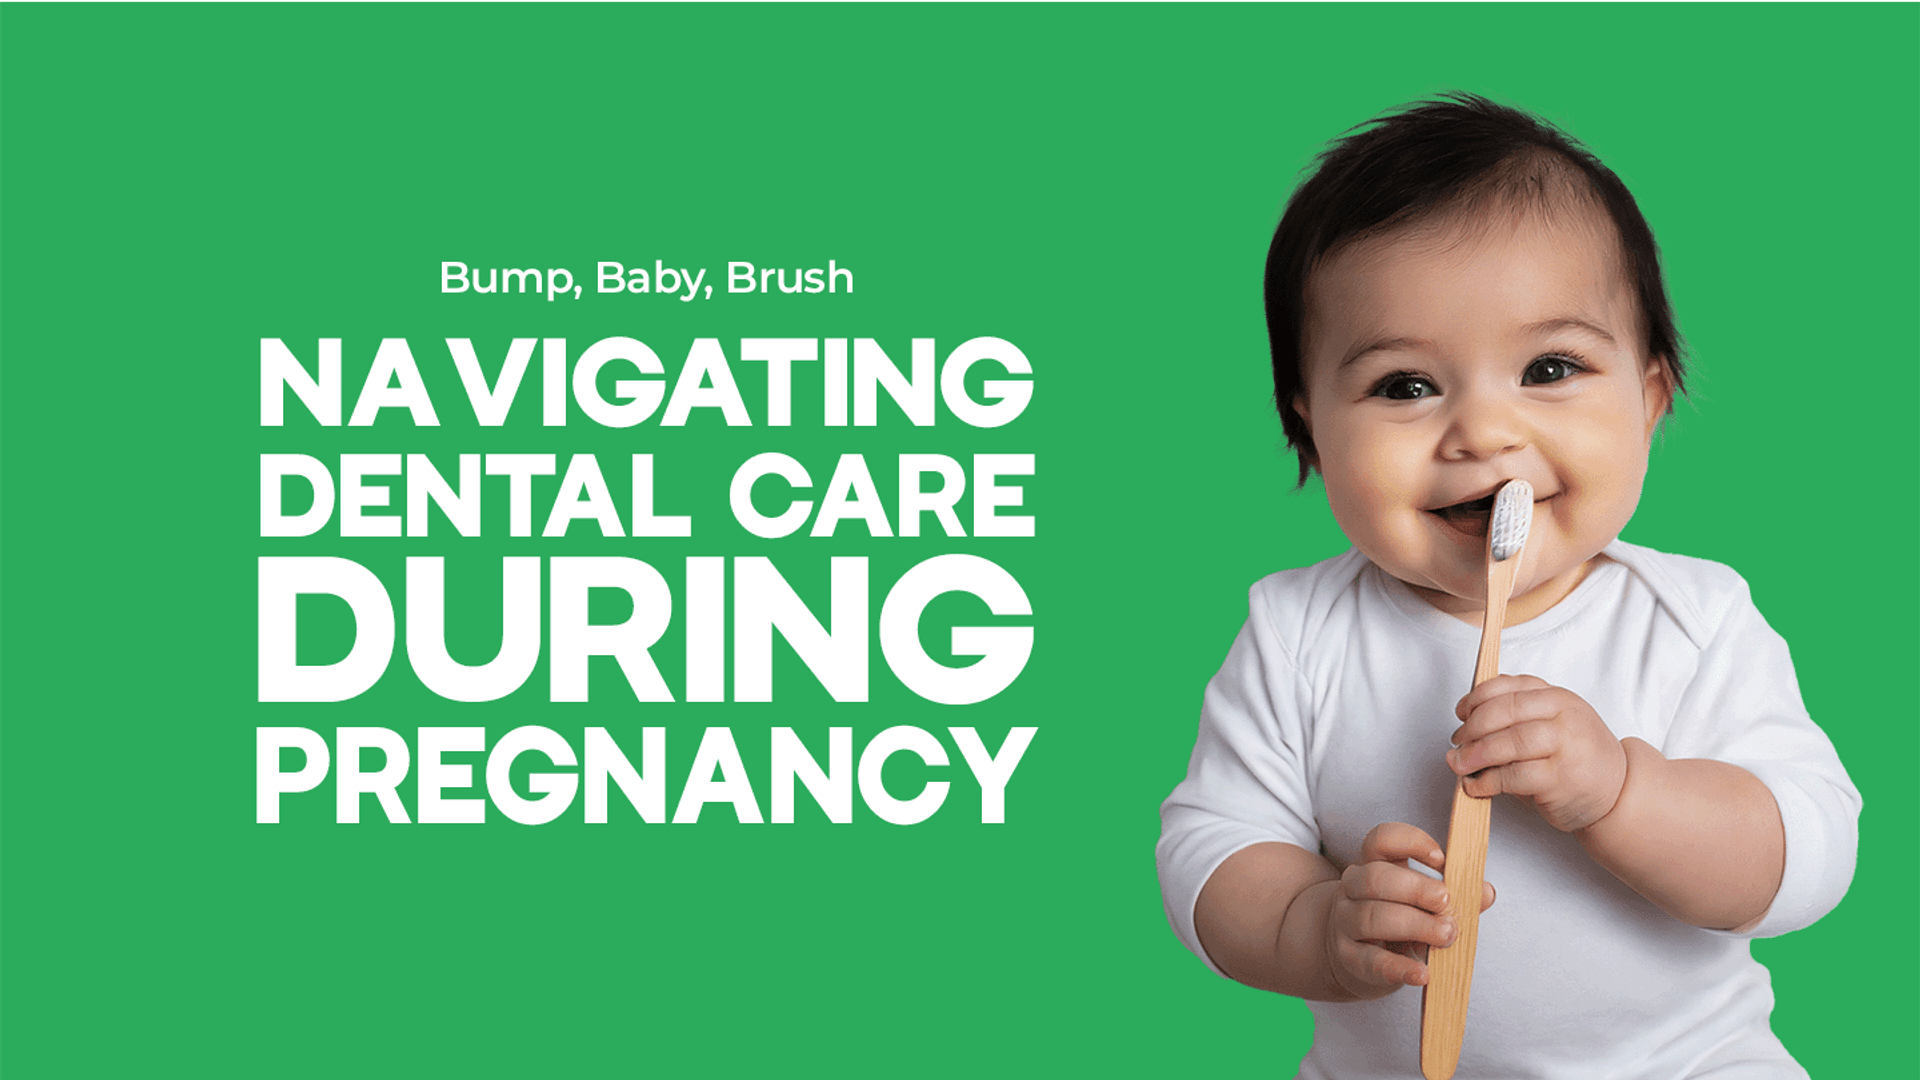 Bump, Baby, Brush: Navigating Dental Care During Pregnancy